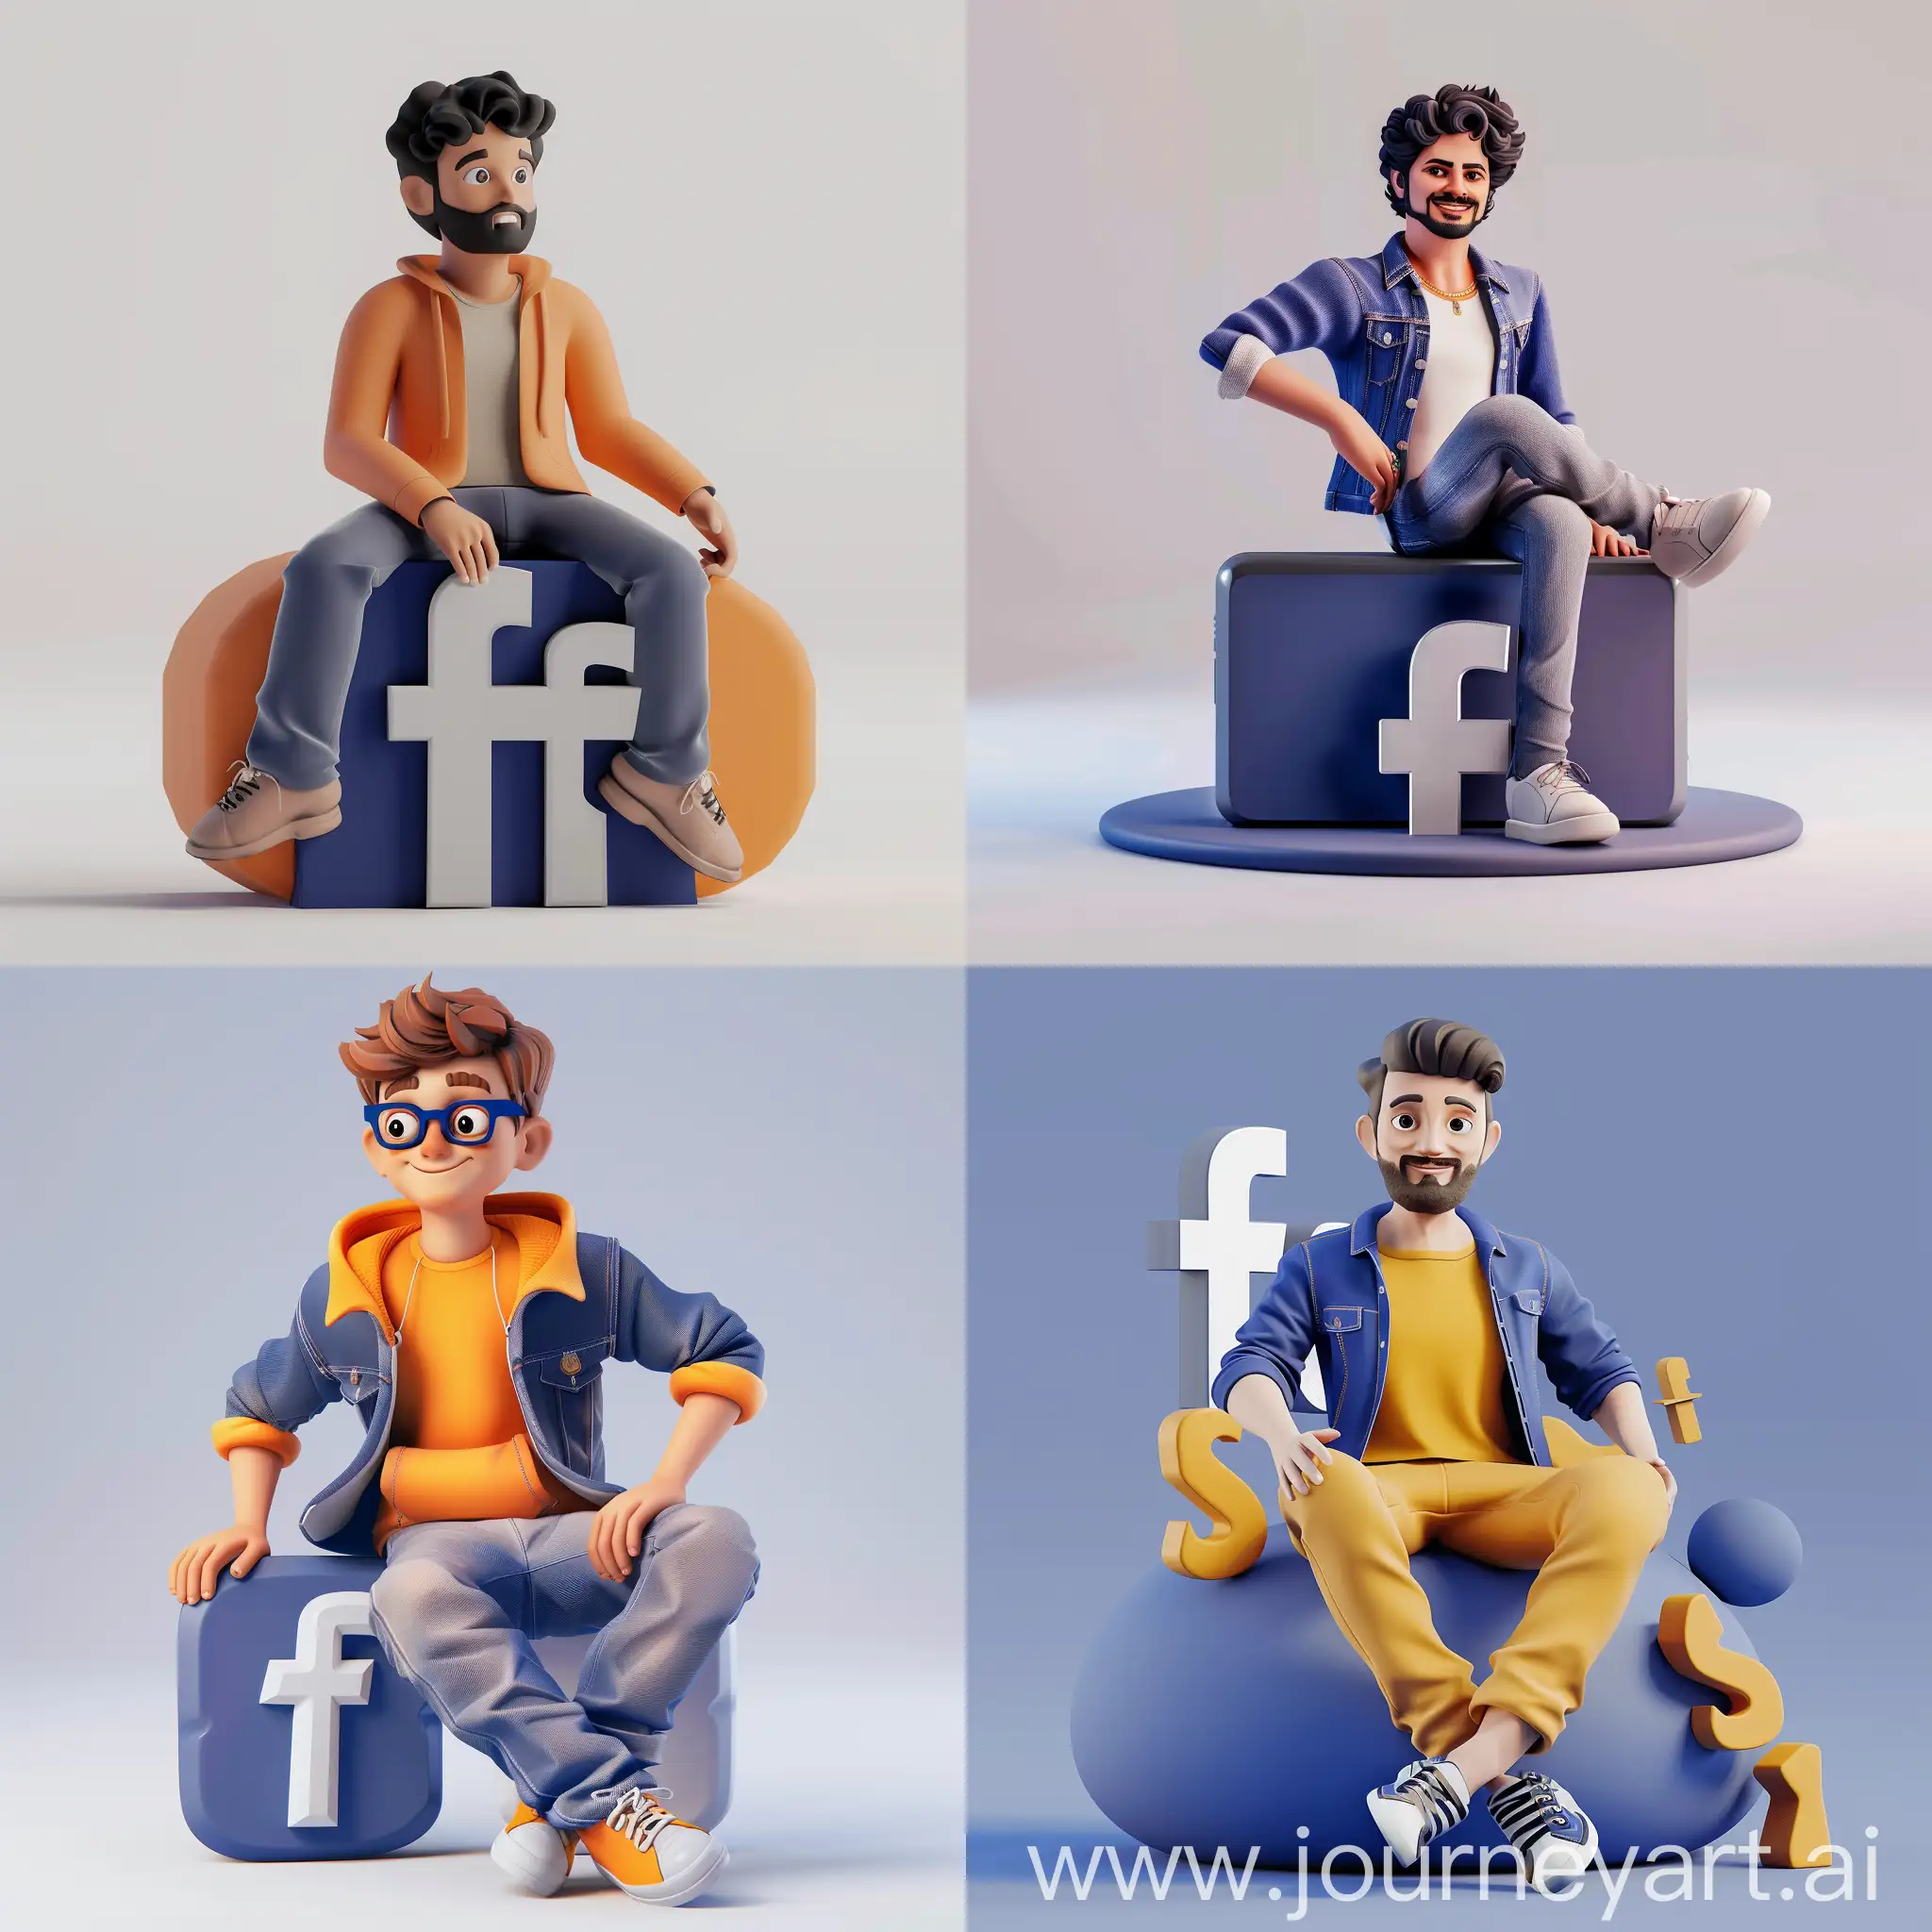 Modern-Indian-Man-Sitting-on-Facebook-Profile-Mockup